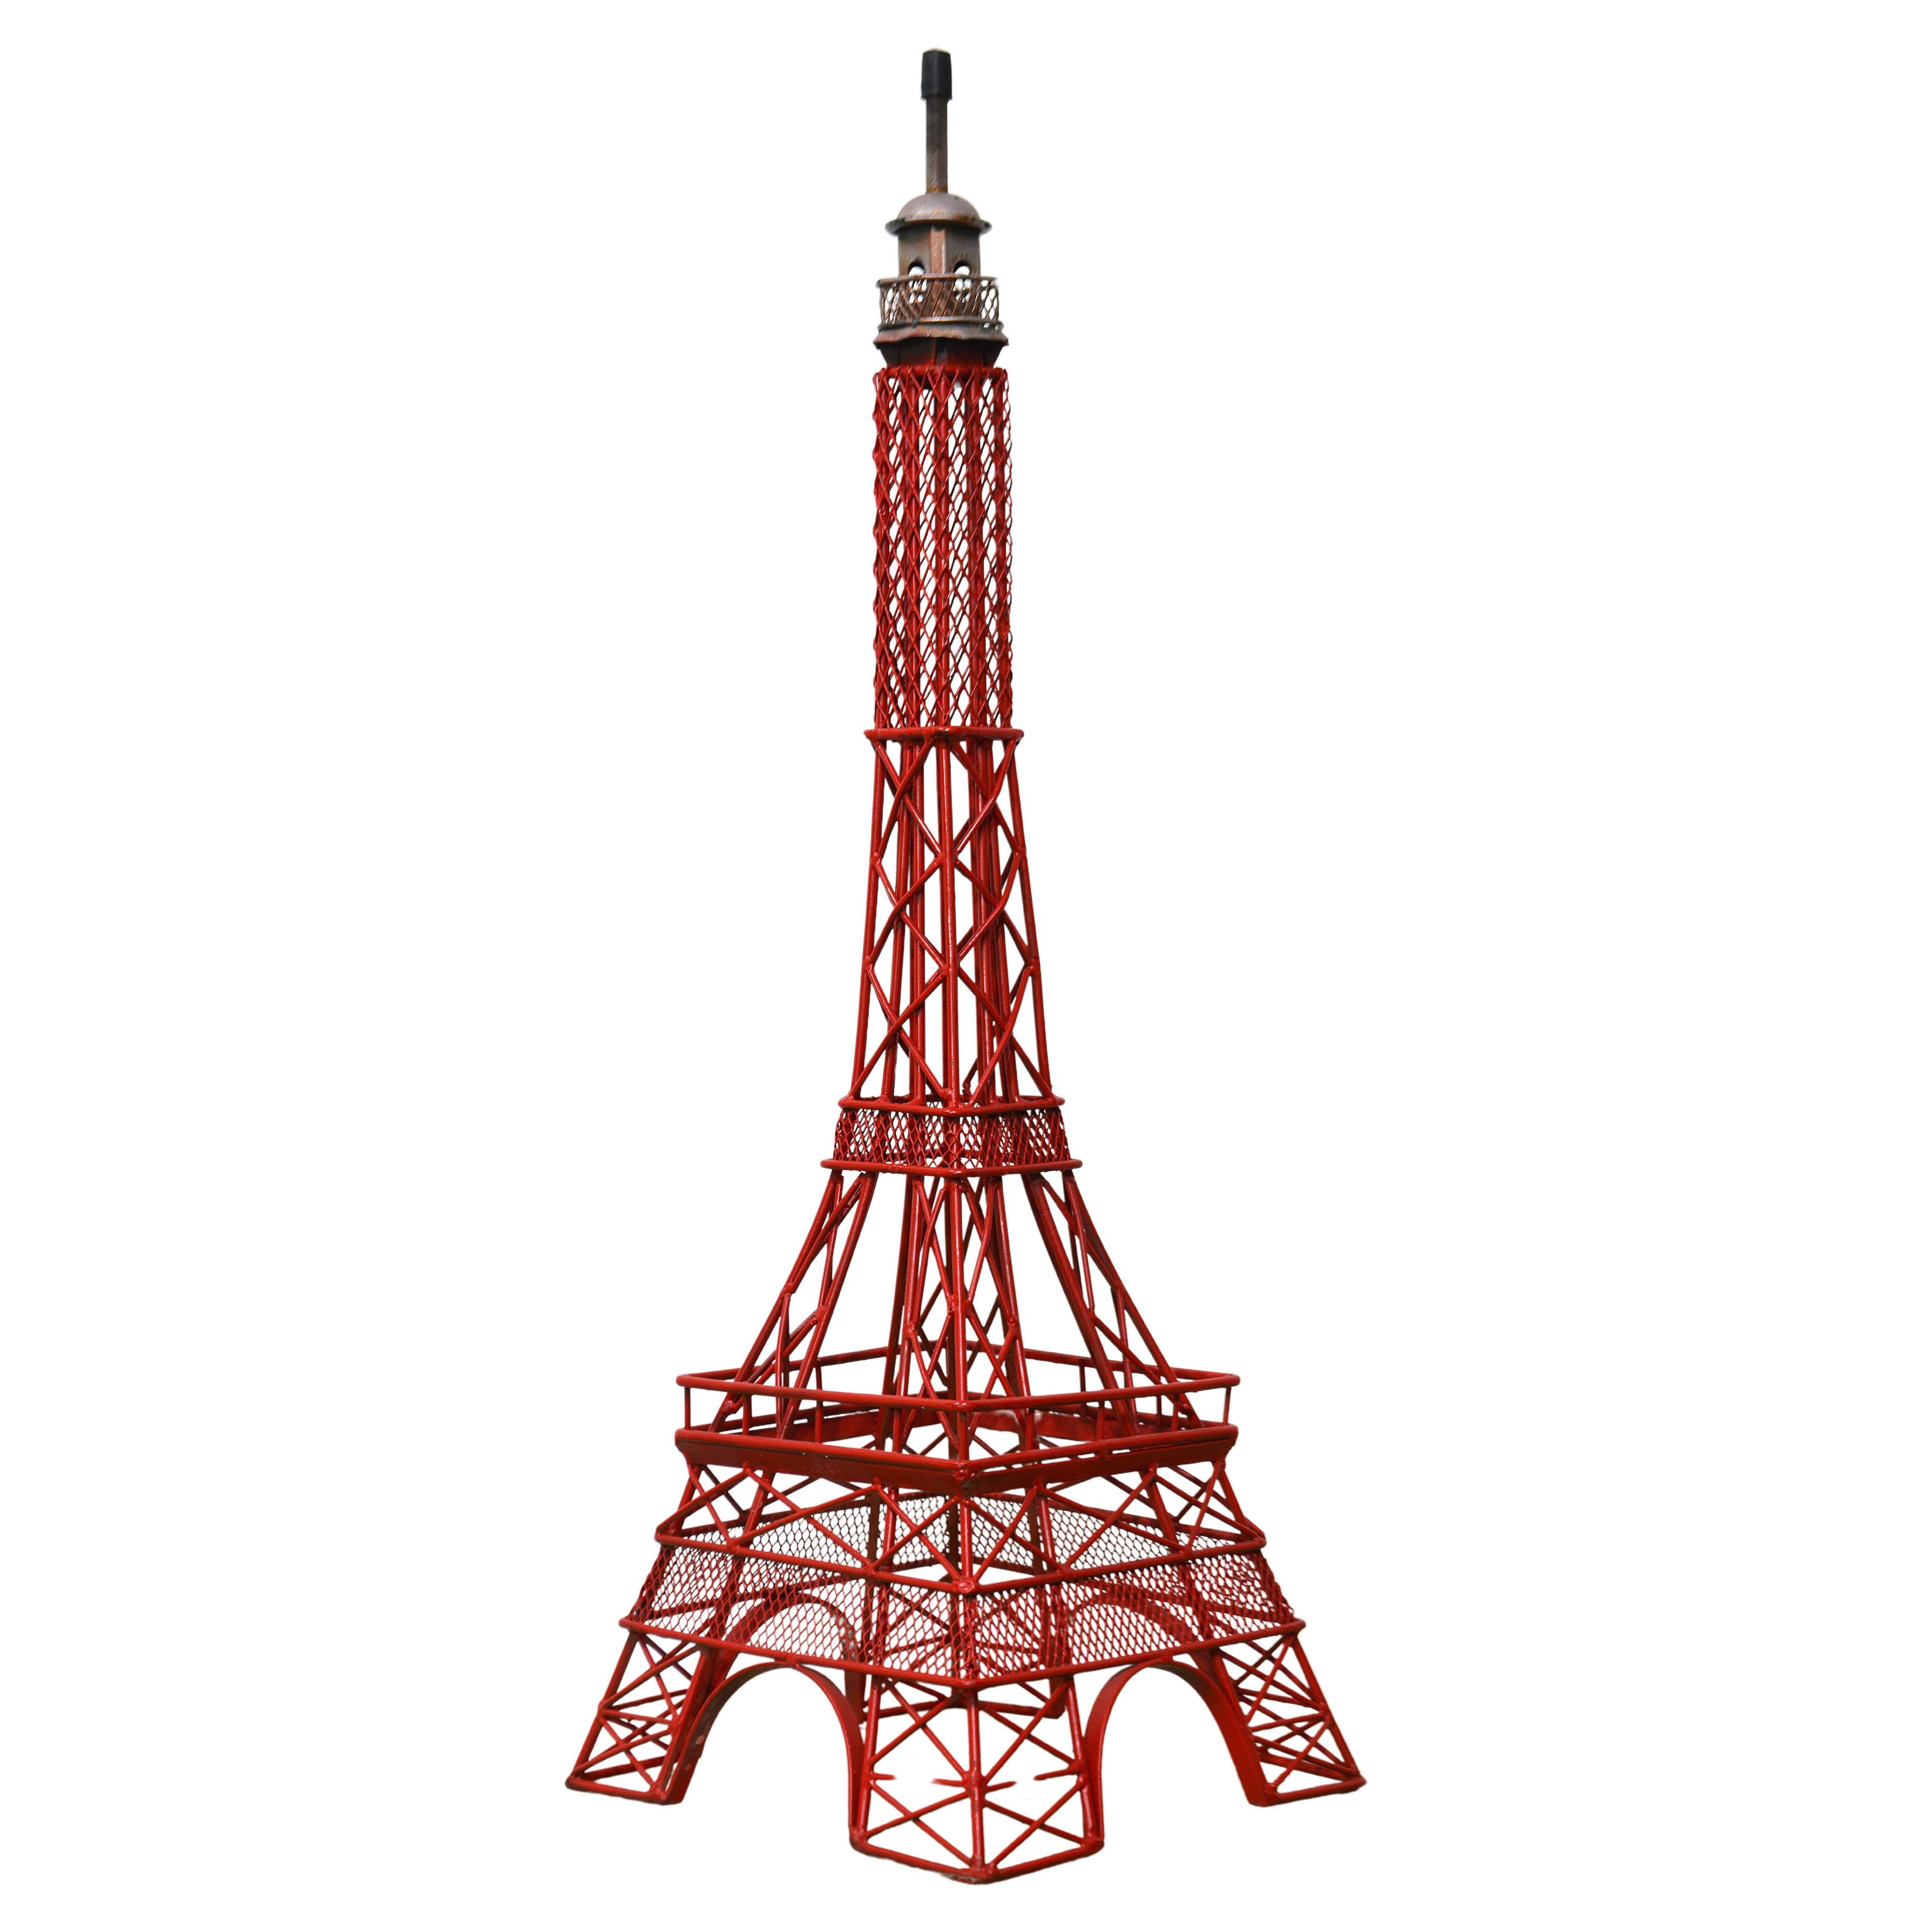 Große bemalte dekorative Eifel Tower inspirierte Eifel-Leuchtturm-Skulptur oder Modell aus Stahl